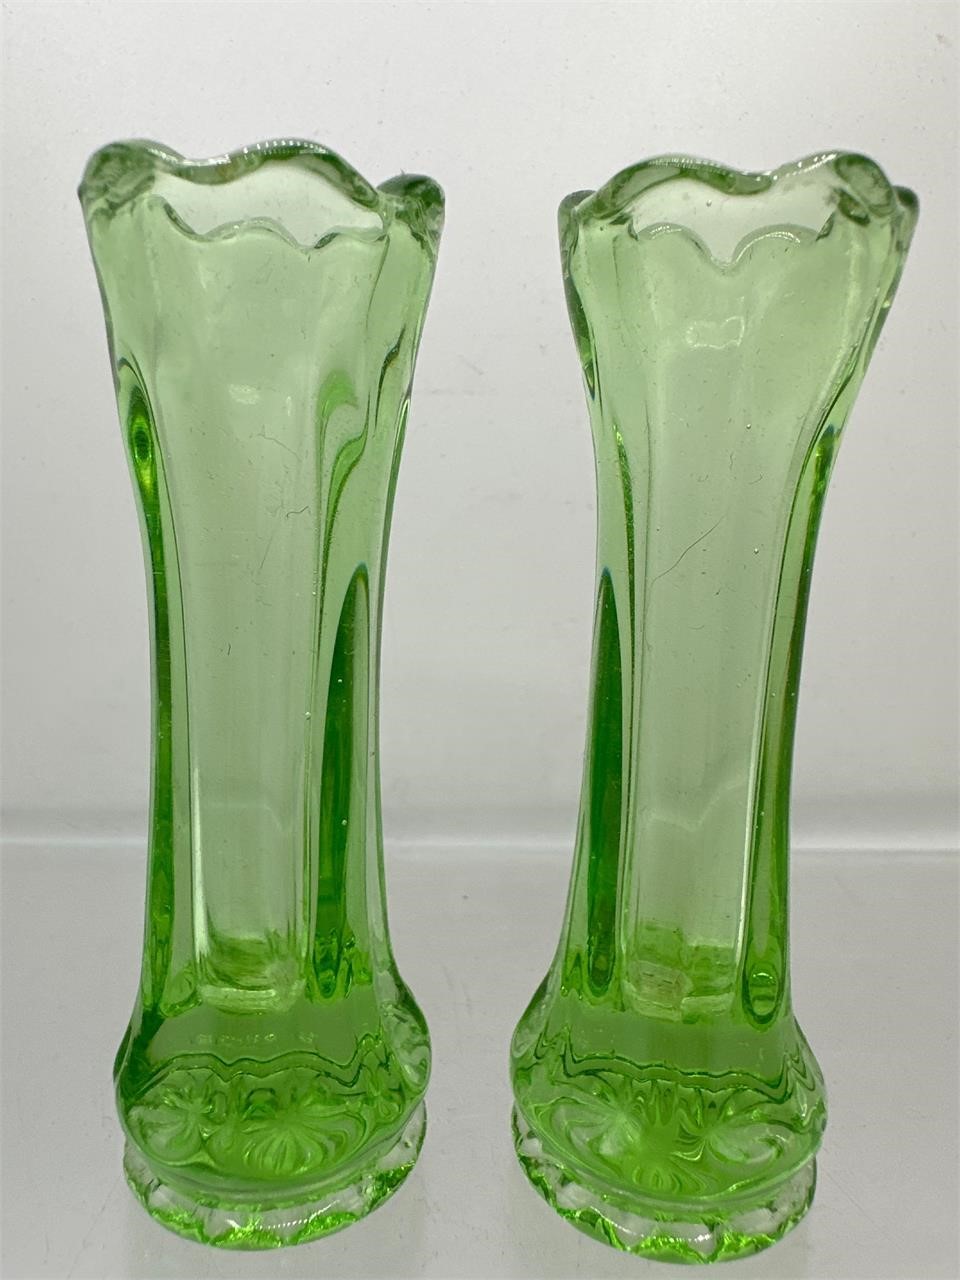 Miniature green glass bud vases